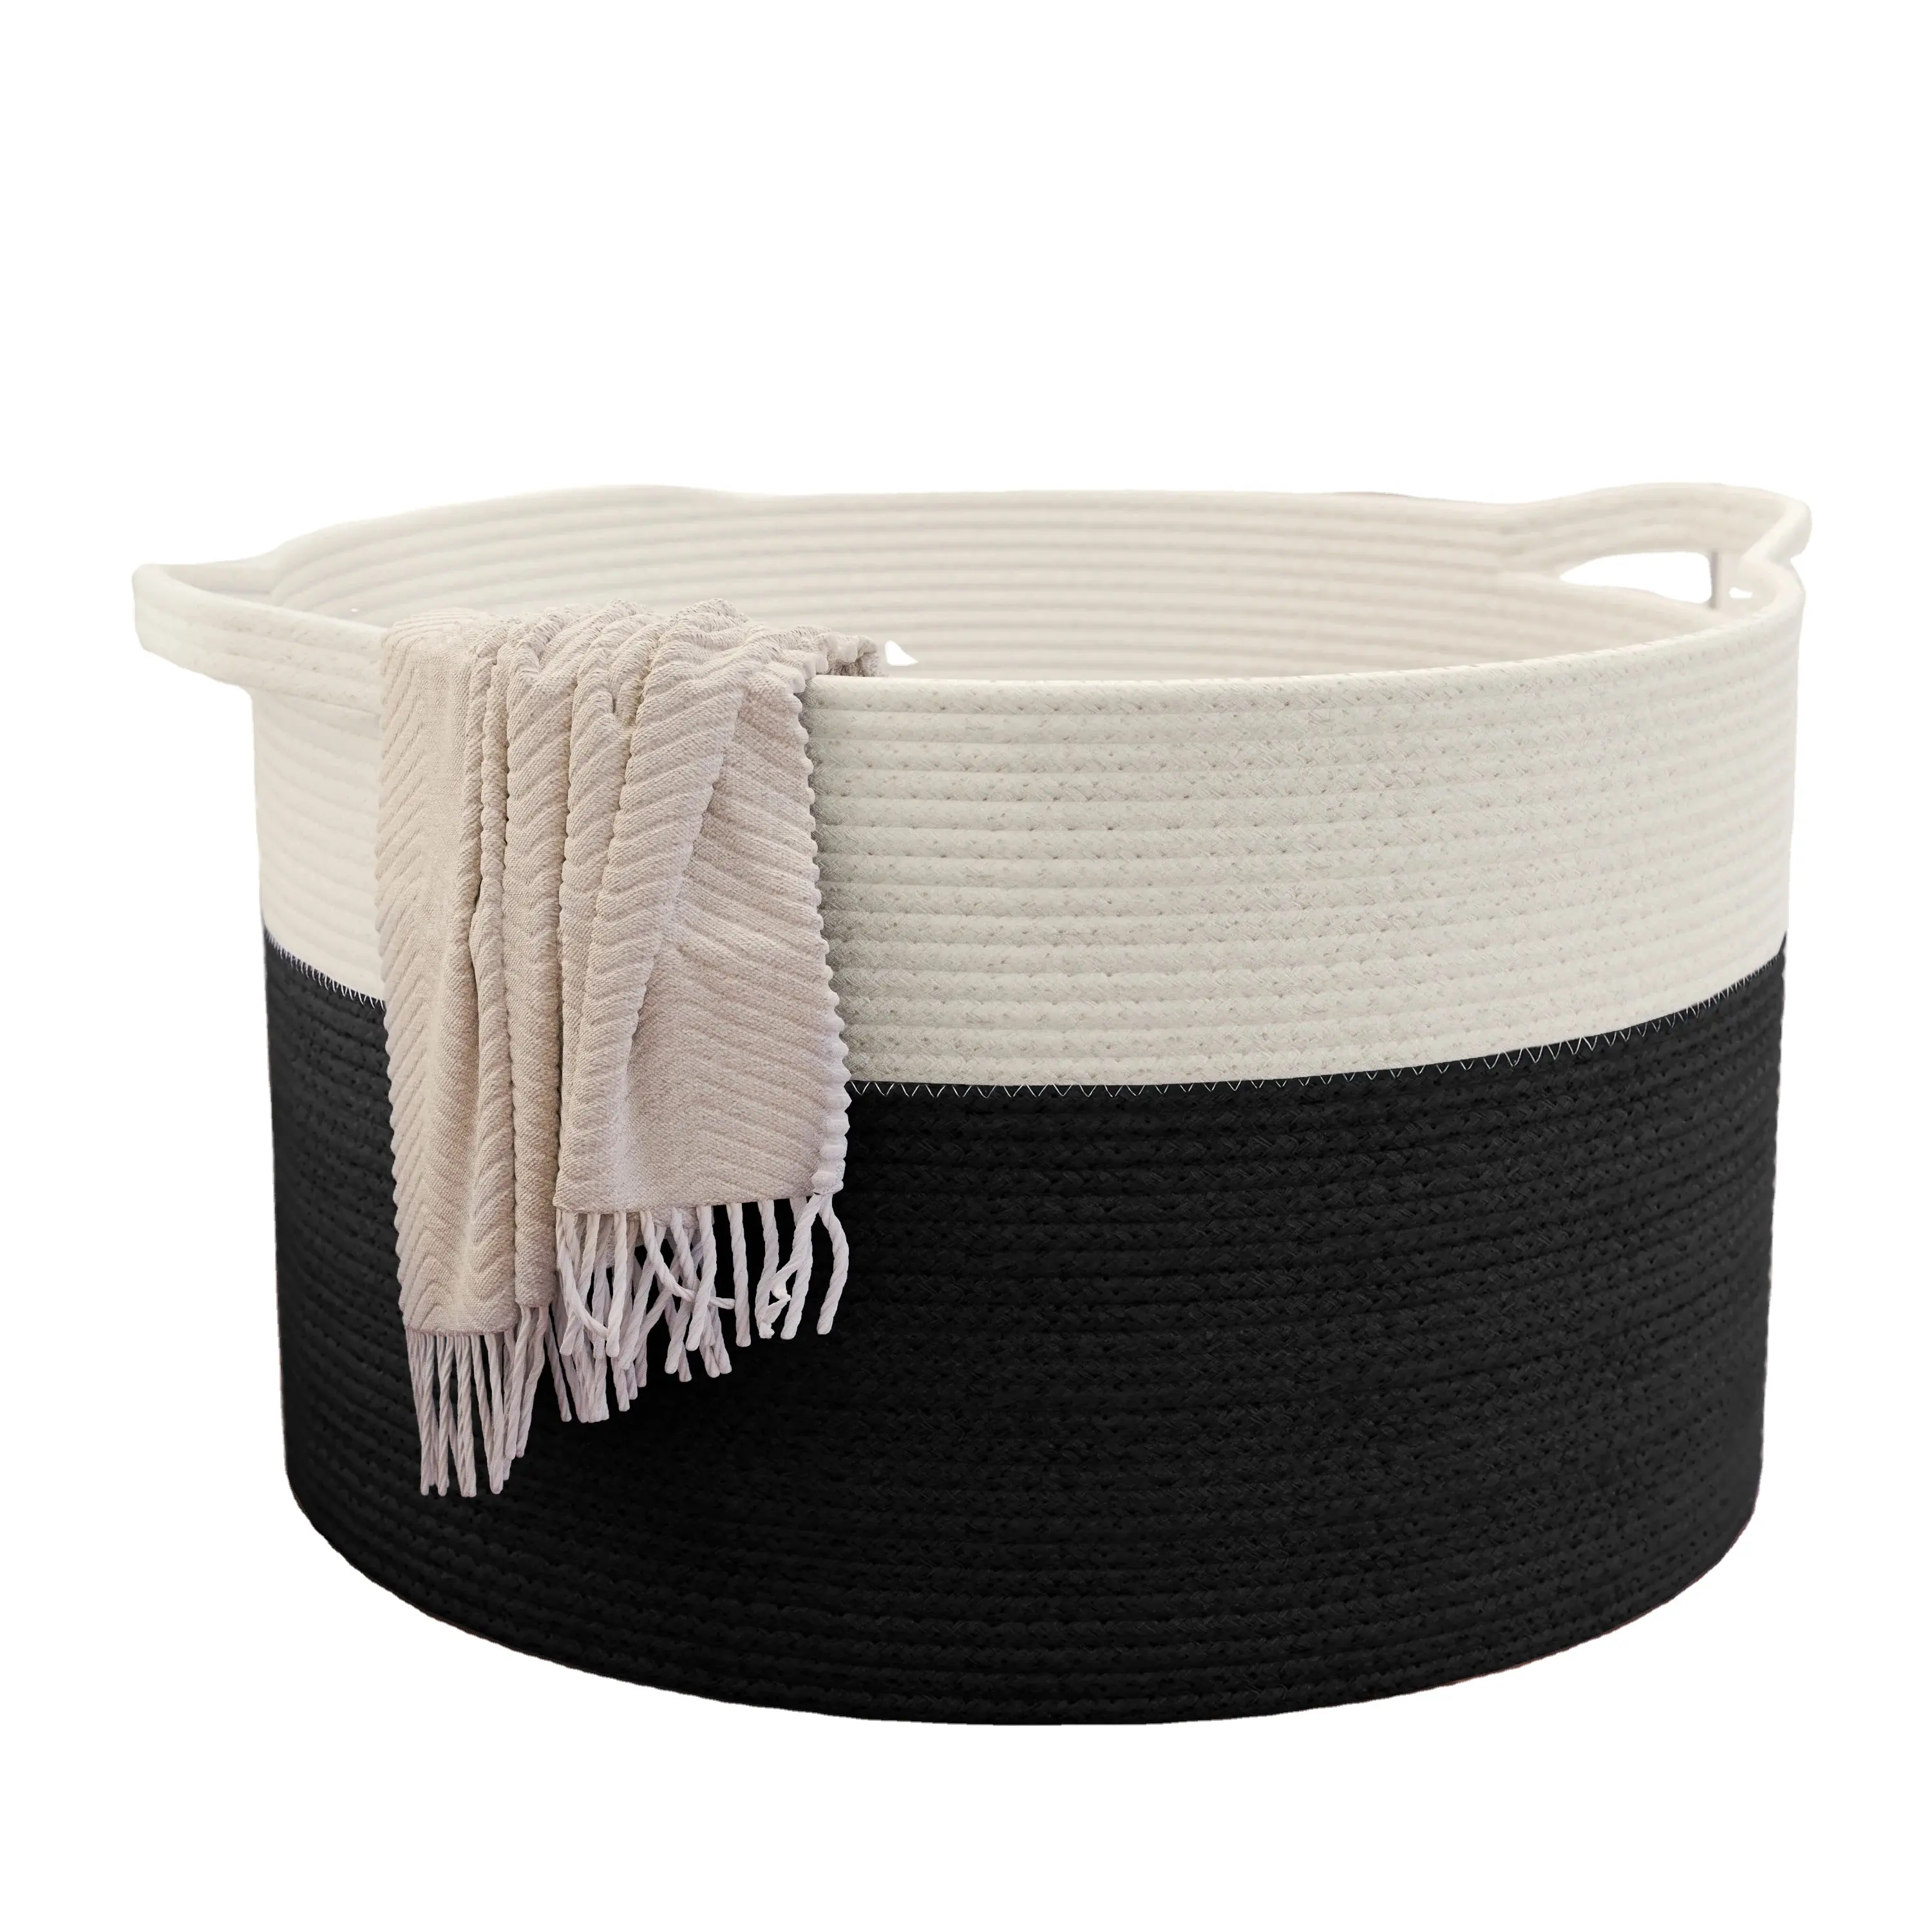 Ultimate Look dokuma pamuk halat sepet beyaz ve siyah renk pamuk halat sepetleri ile giysi ve oyuncak depolama sepeti